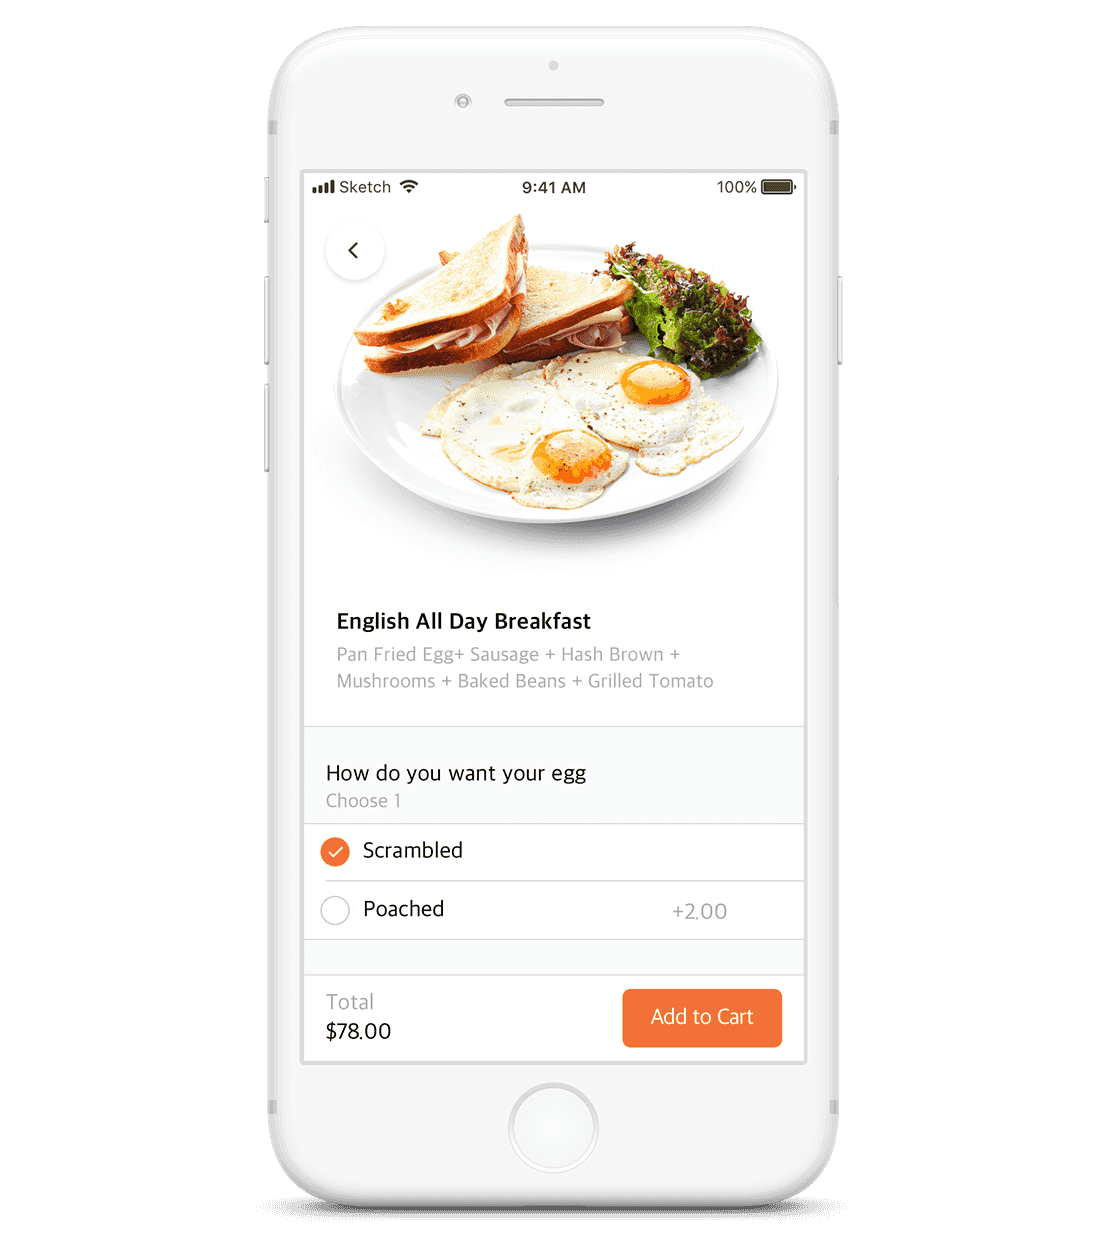 Part of Eats365’s User App user interface.